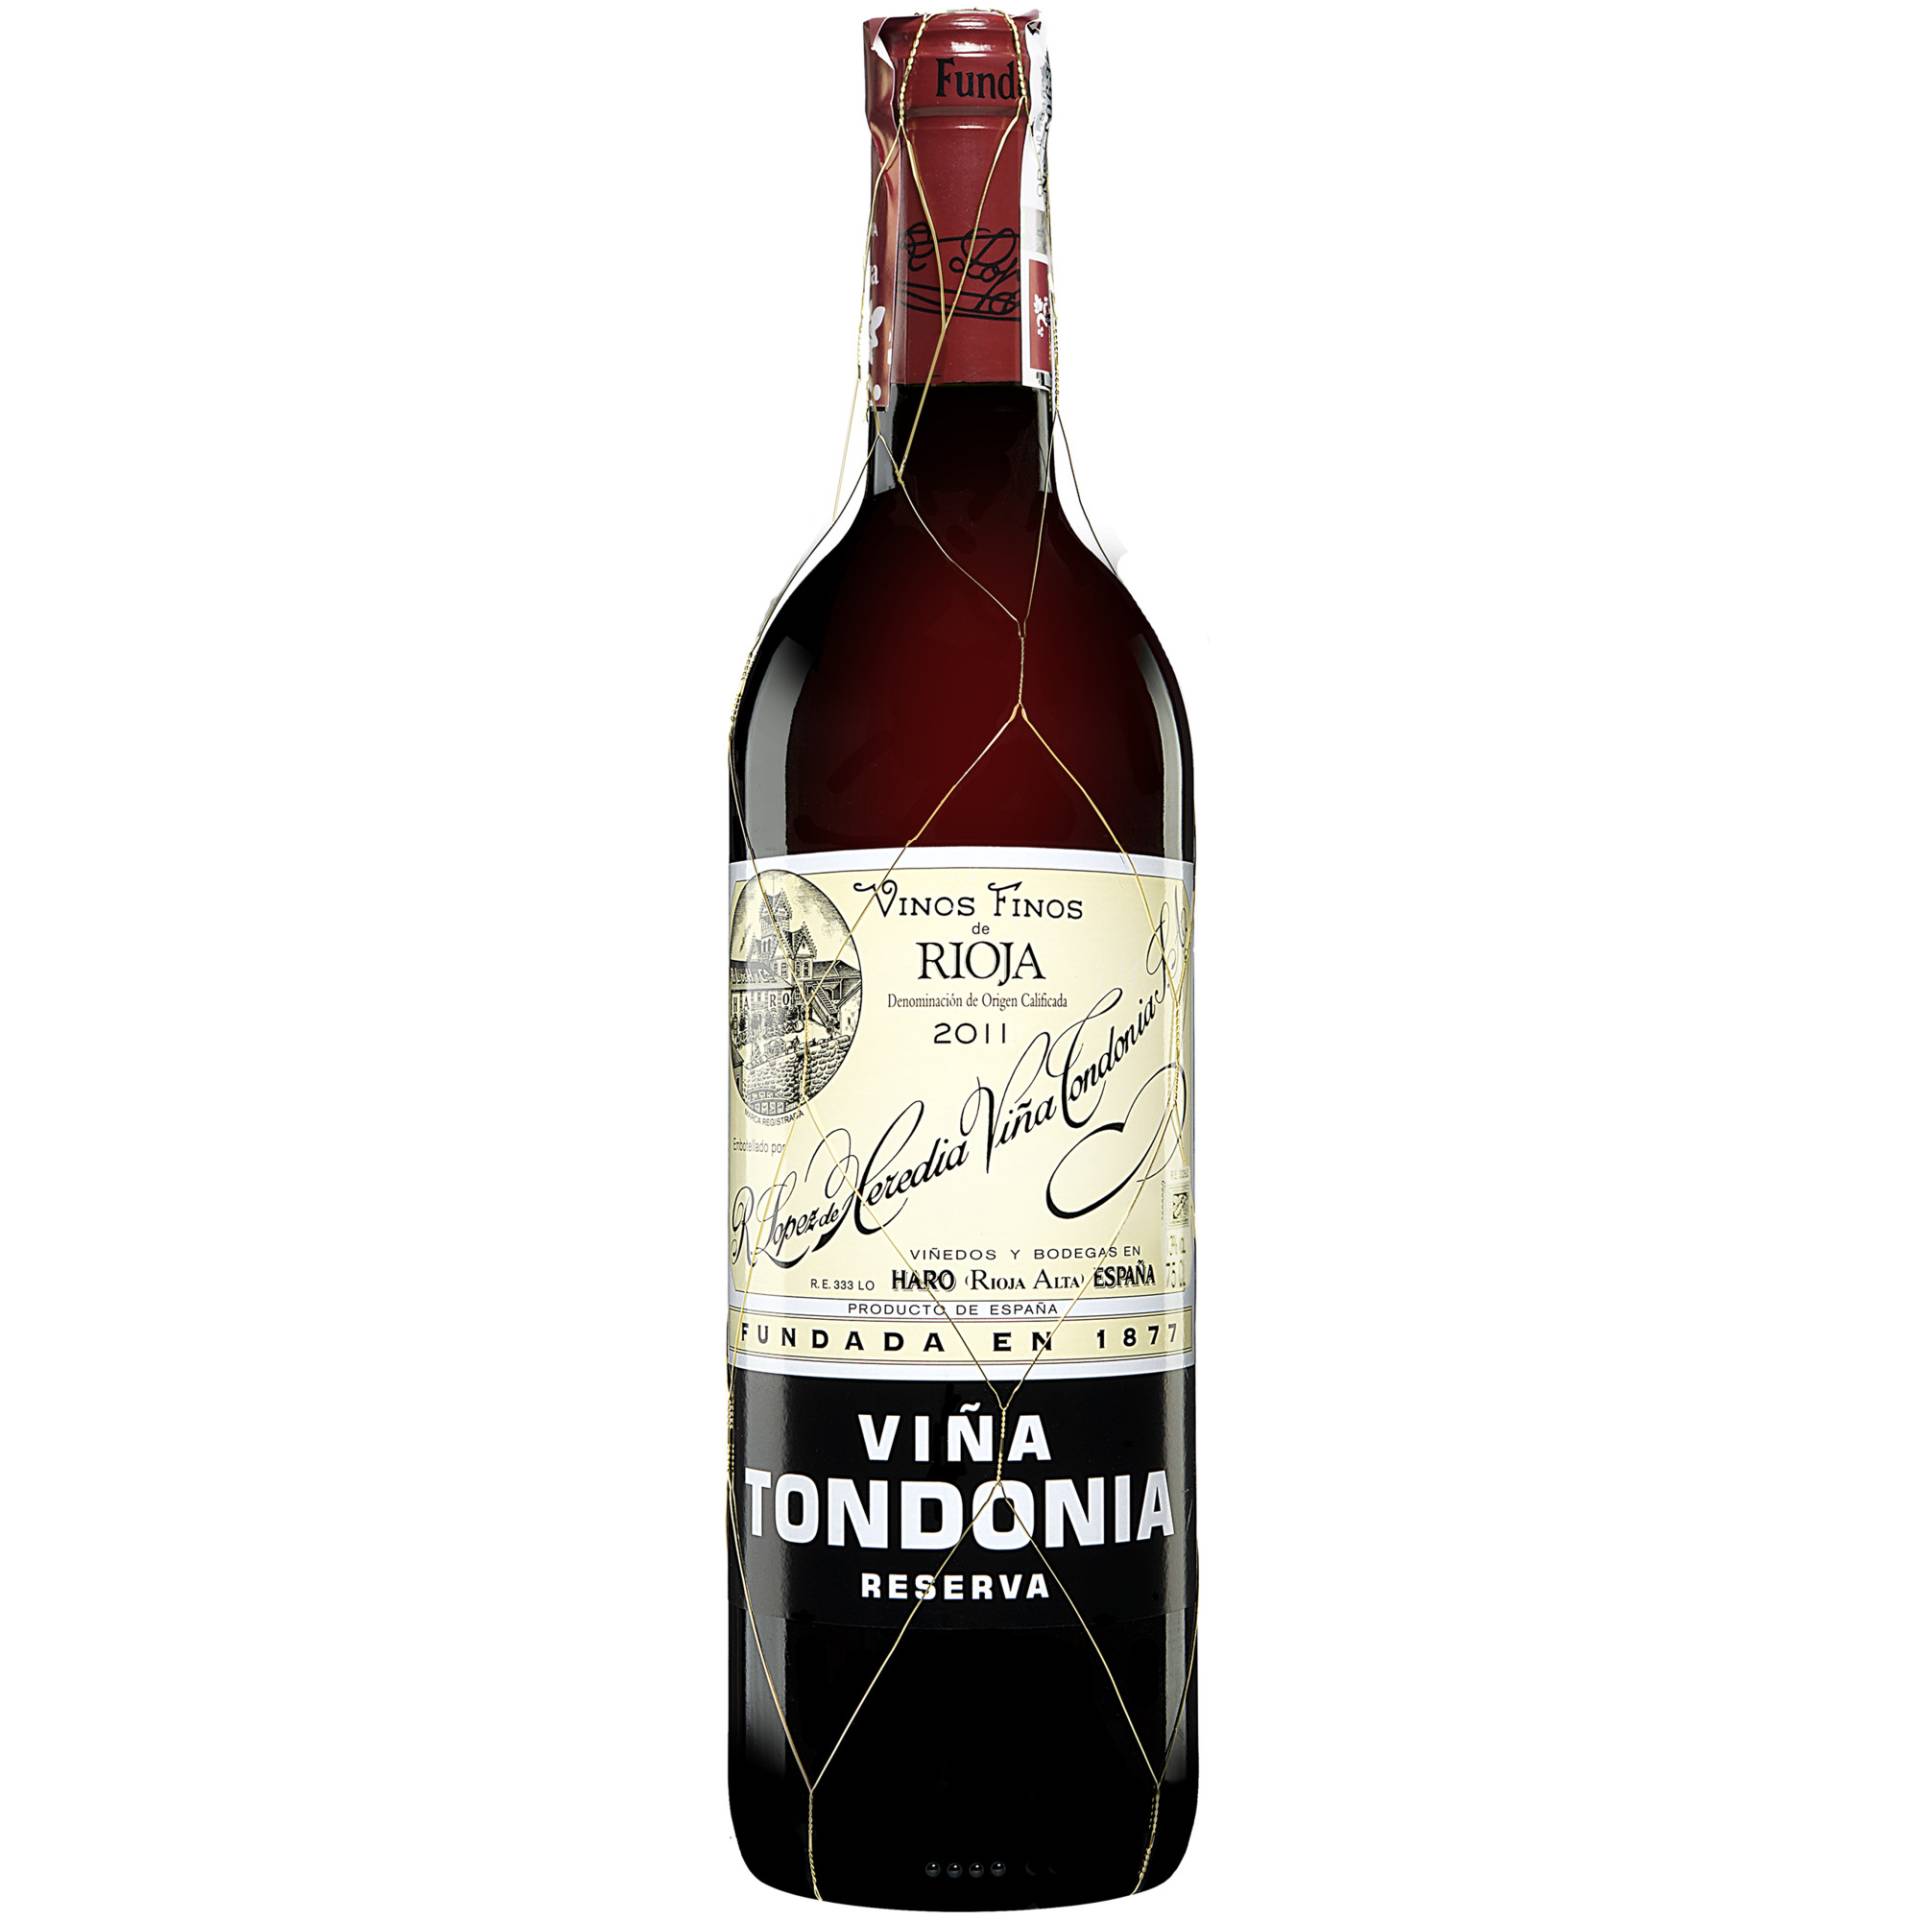 Tondonia »Viña Tondonia« Tinto Reserva 2011  0.75L 13% Vol. Rotwein Trocken aus Spanien von López de Heredia - Viña Tondonia